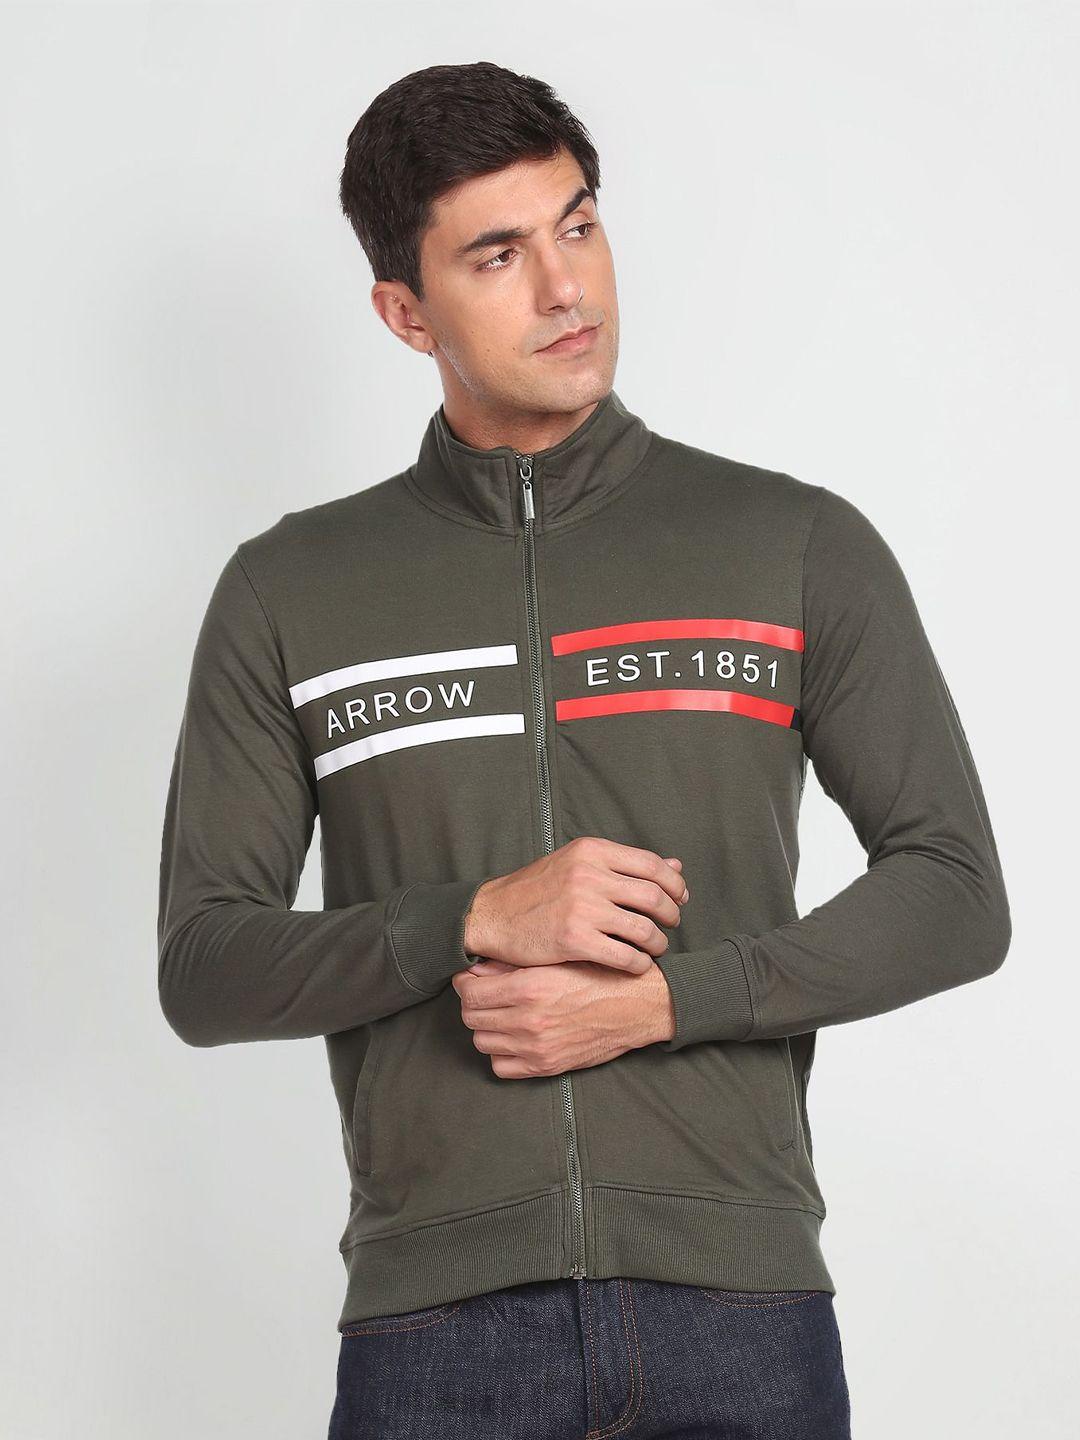 arrow-sport-typography-printed-mock-collar-sweatshirt